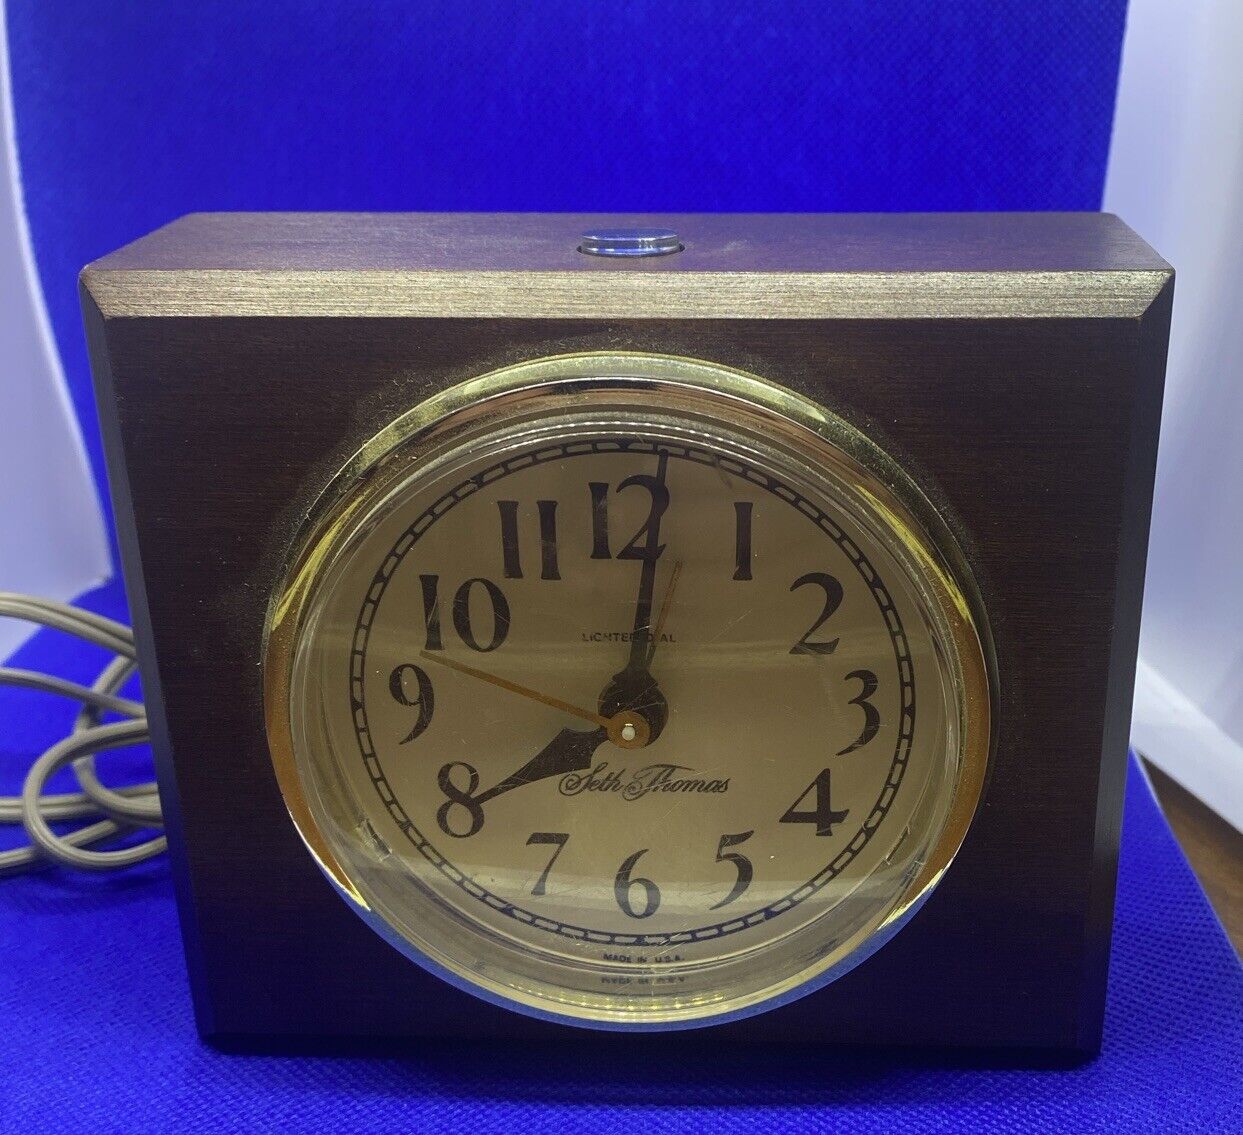 Vintage Seth Thomas Alarm Clock Model 0444 Edgewood Drowse Dialite Tested Works